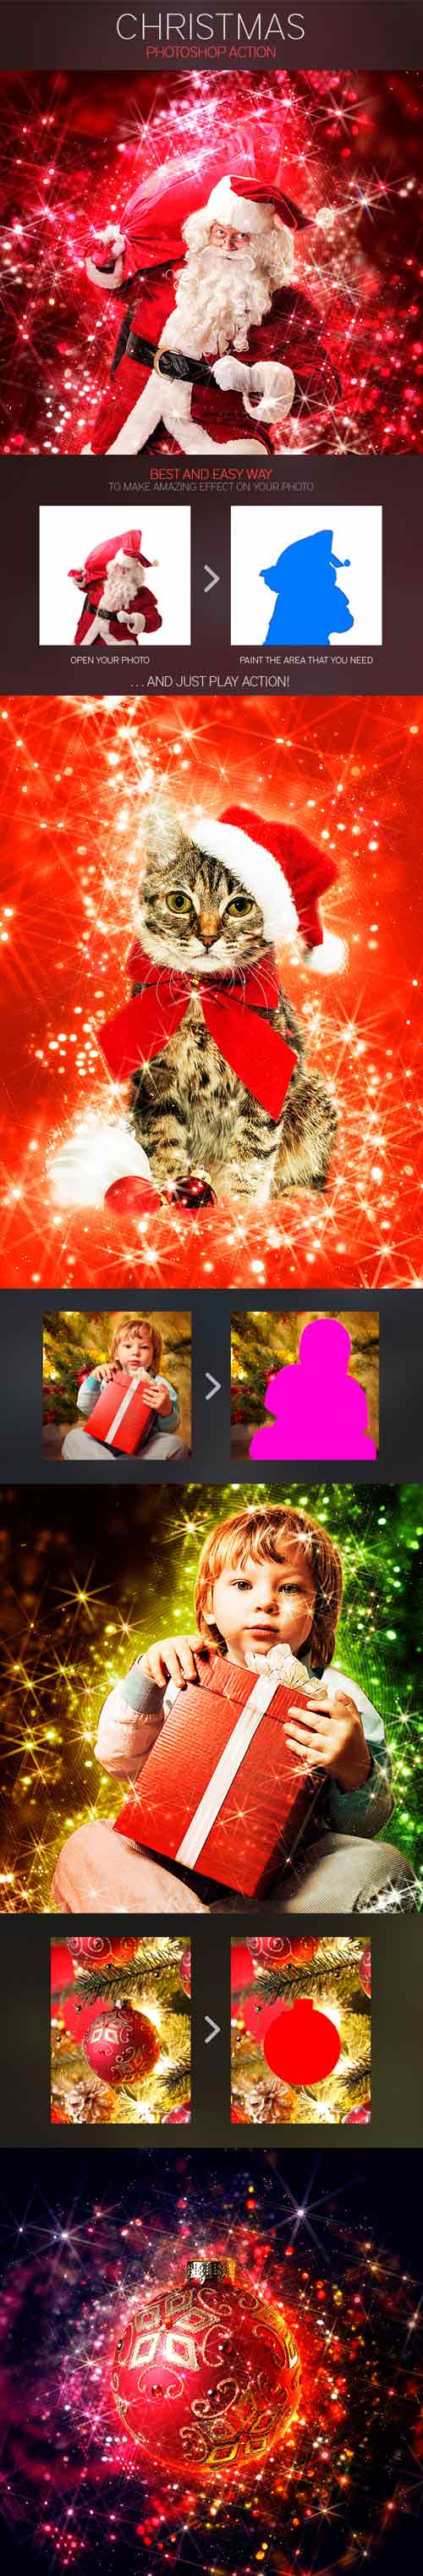 Graphicriver - Christmas Photoshop Action 9409331